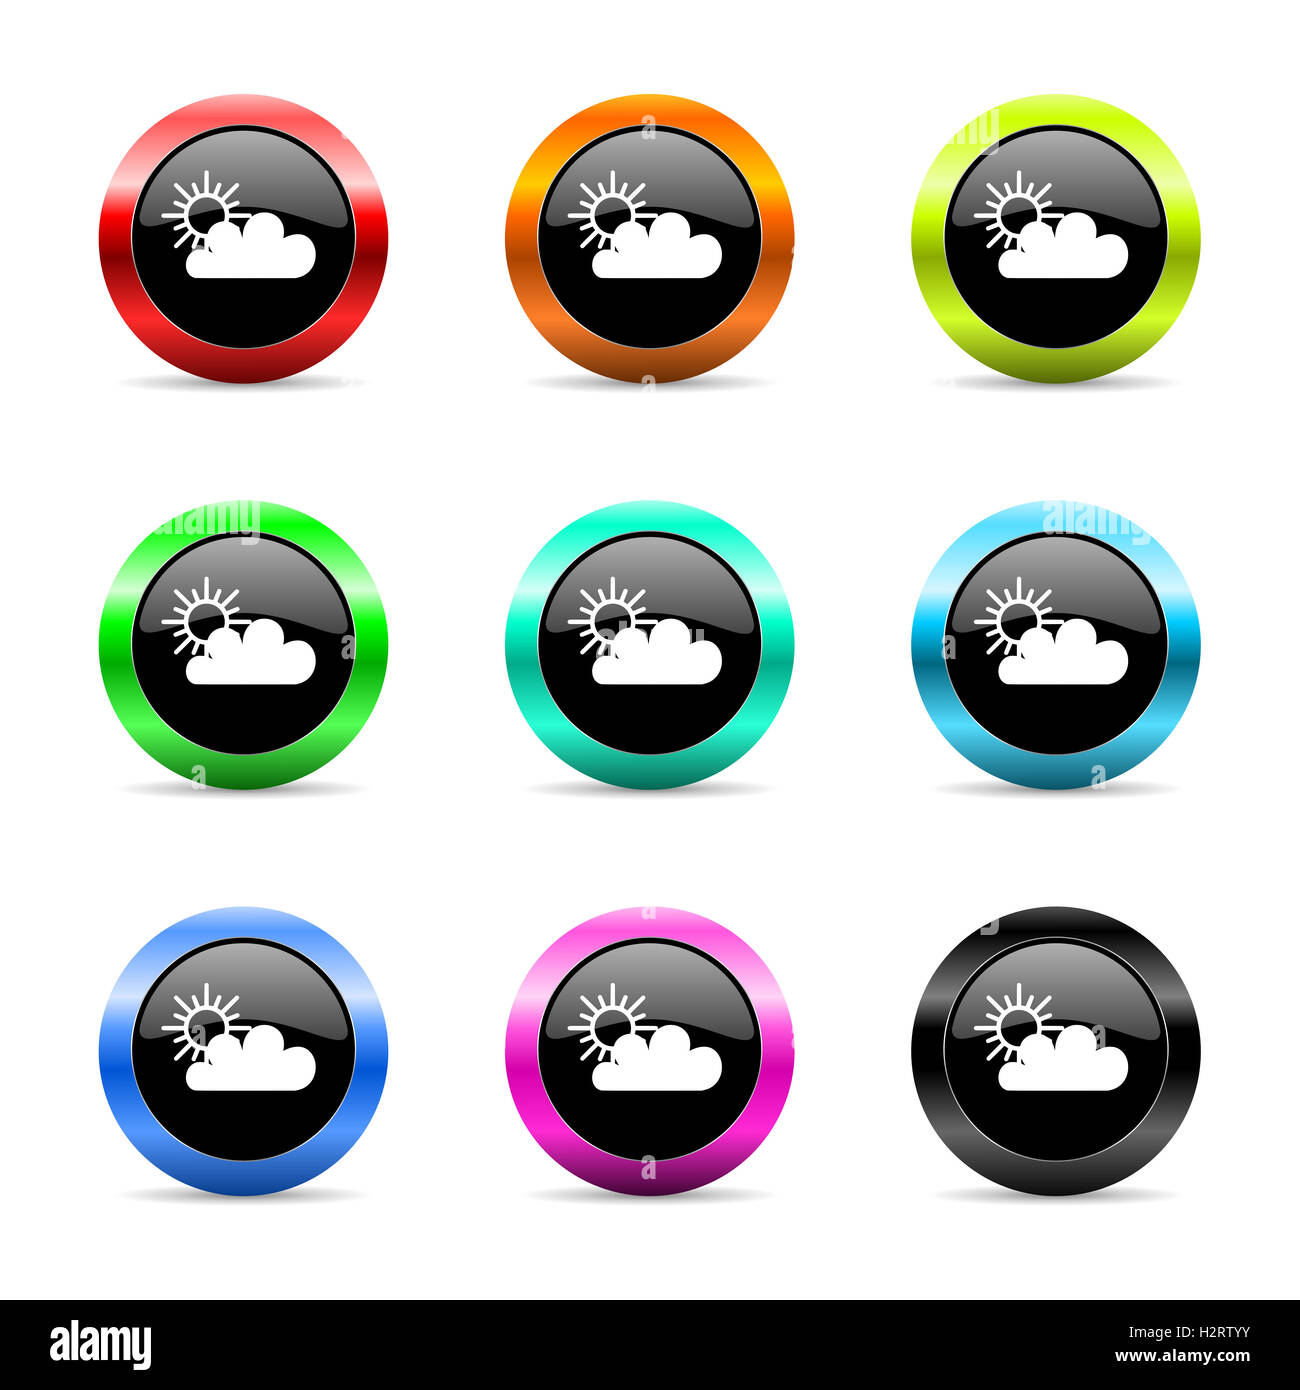 cloud web icons set Stock Photo